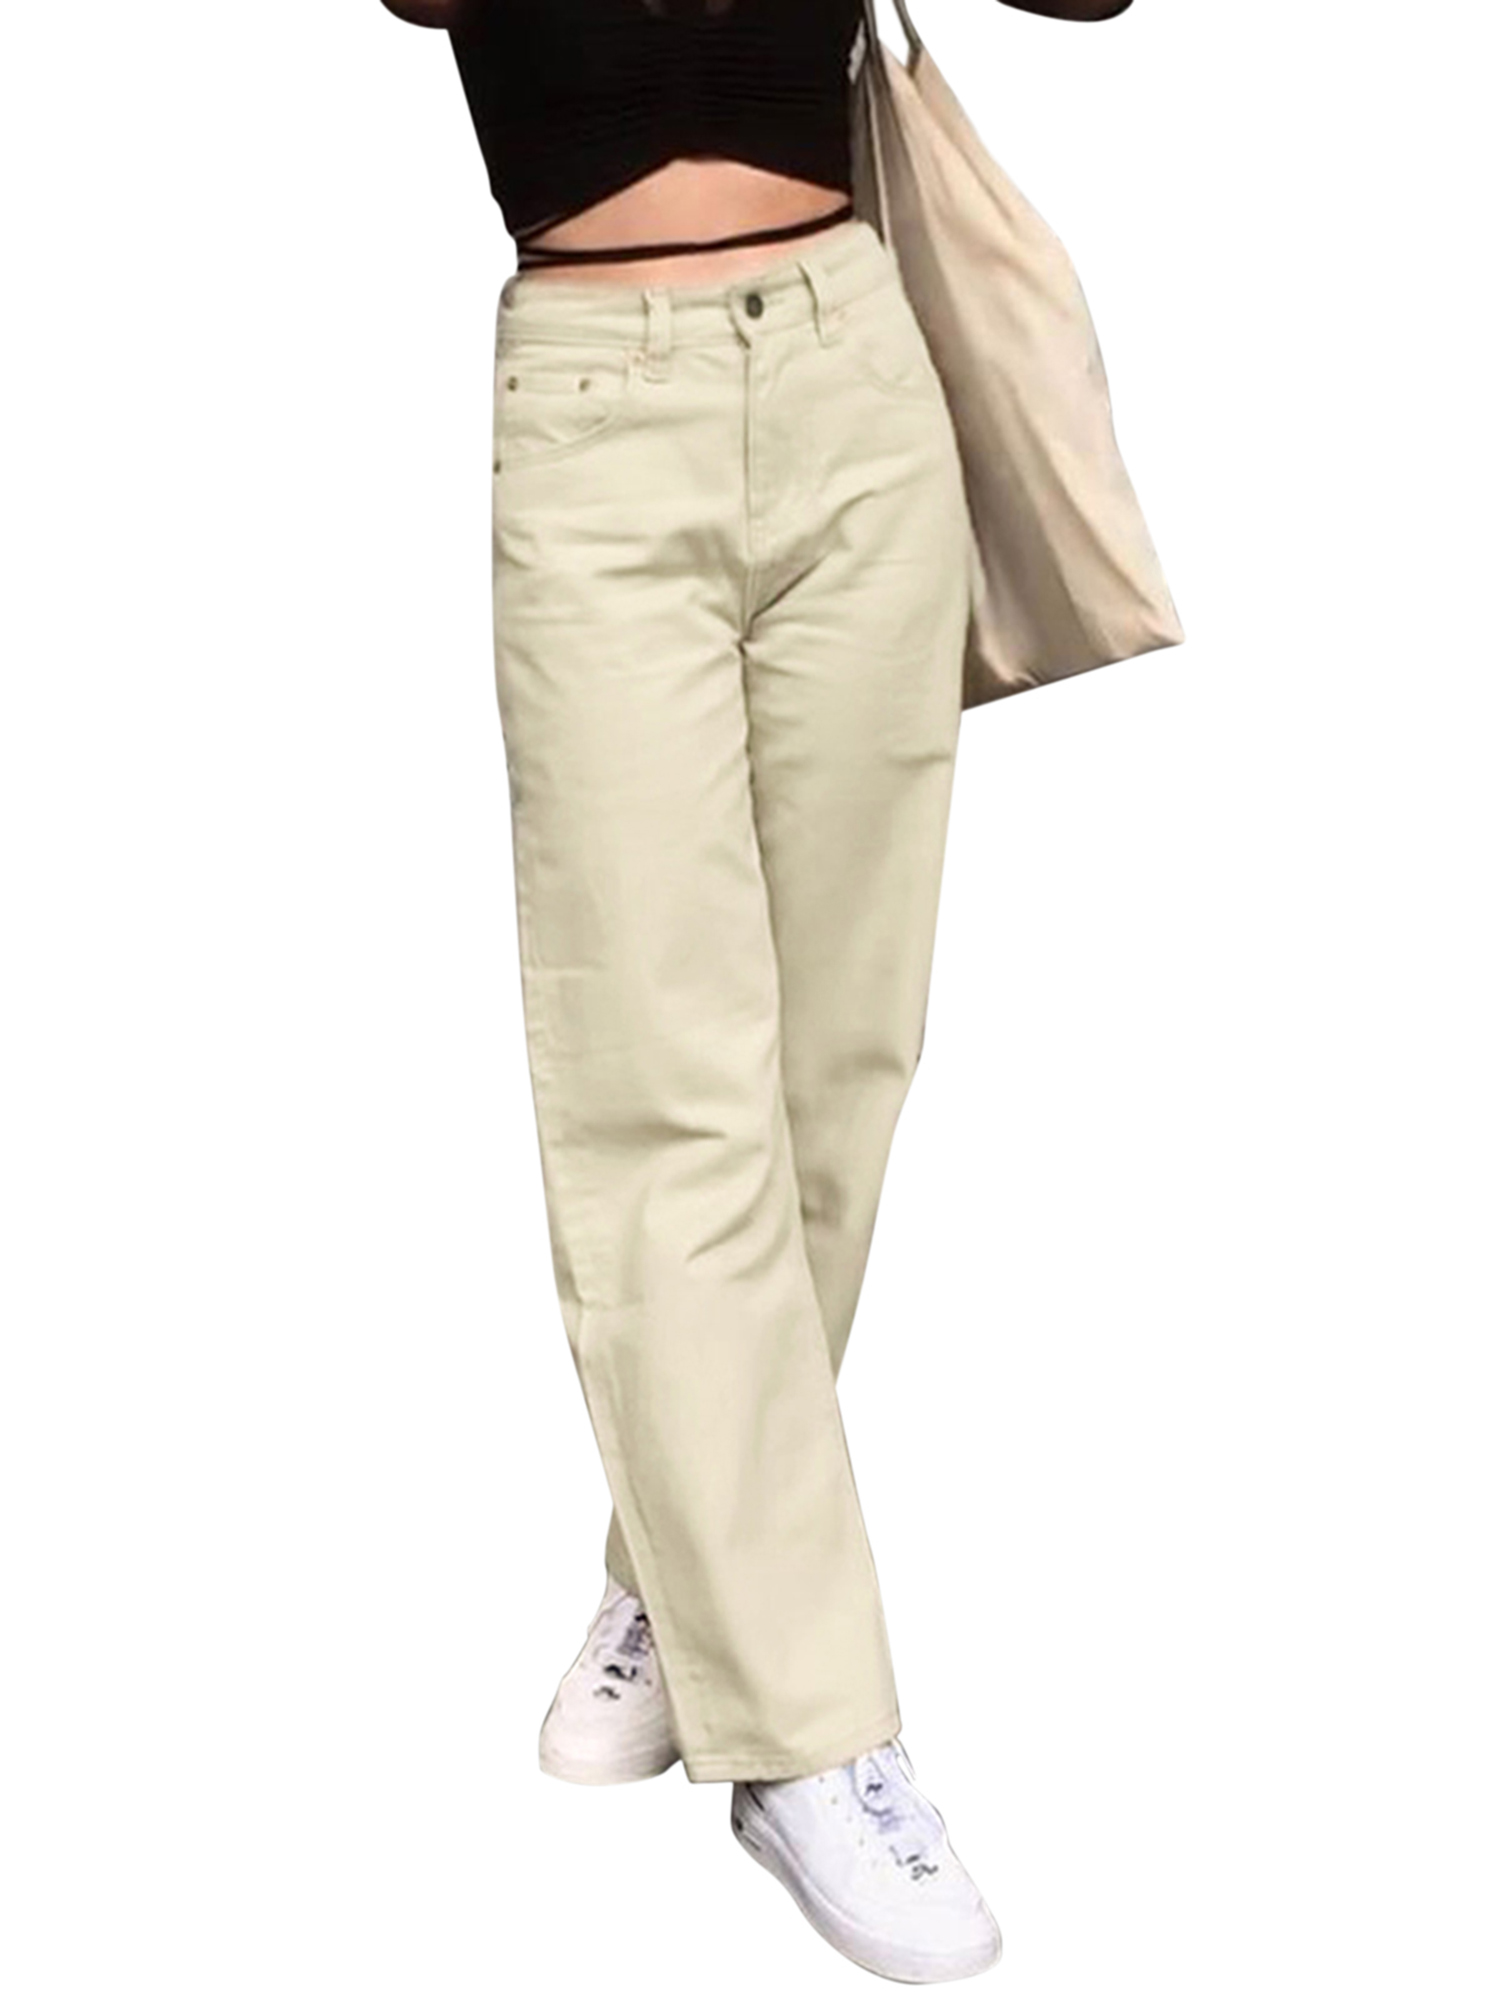 Seyurigaoka Female Solid Color High Waist Jeans Trousers Straight-Leg Pants - image 1 of 5